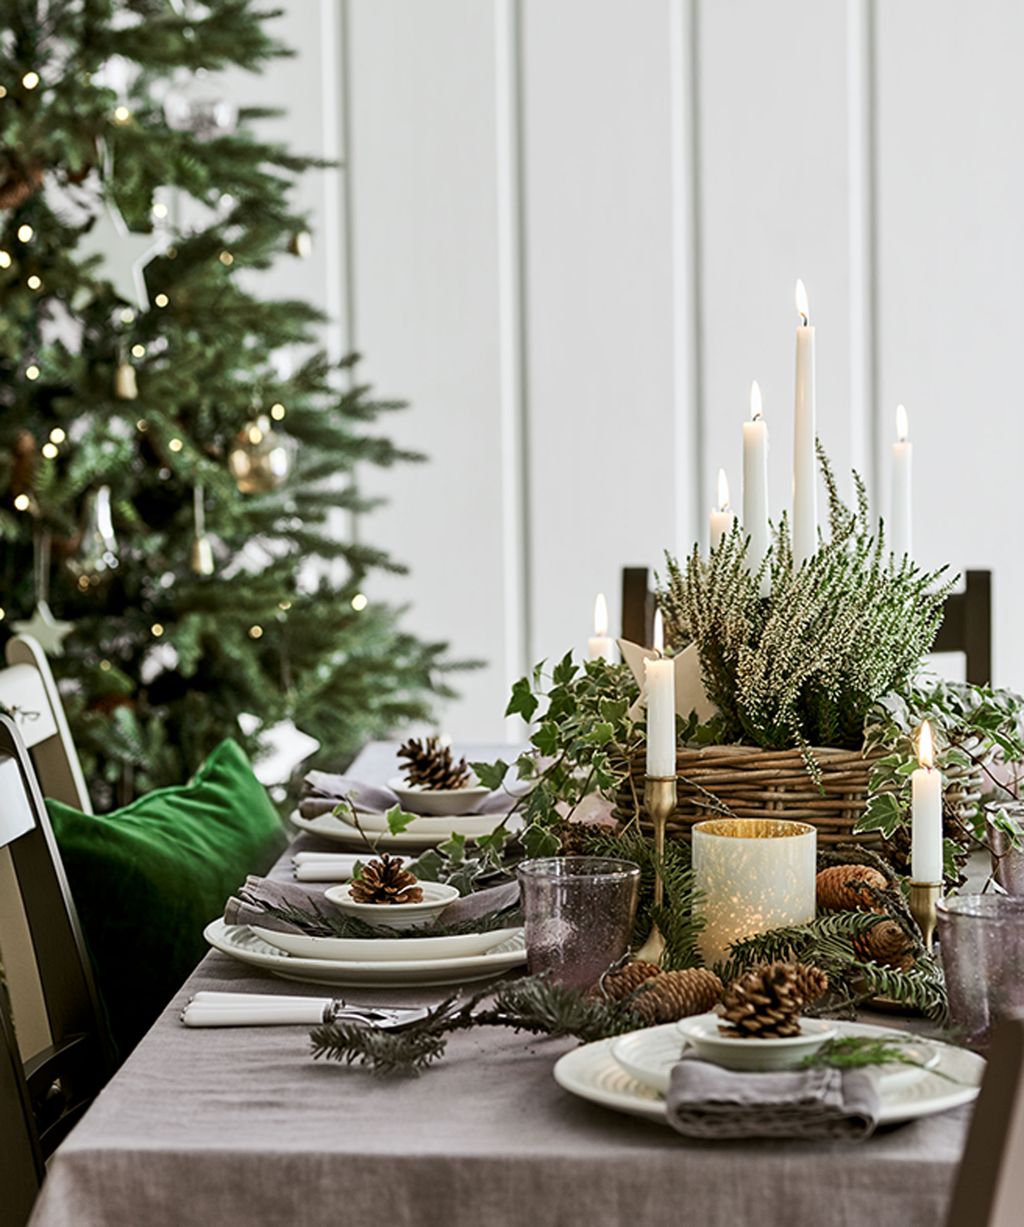 Christmas table centerpiece ideas: 17 beautiful seasonal designs